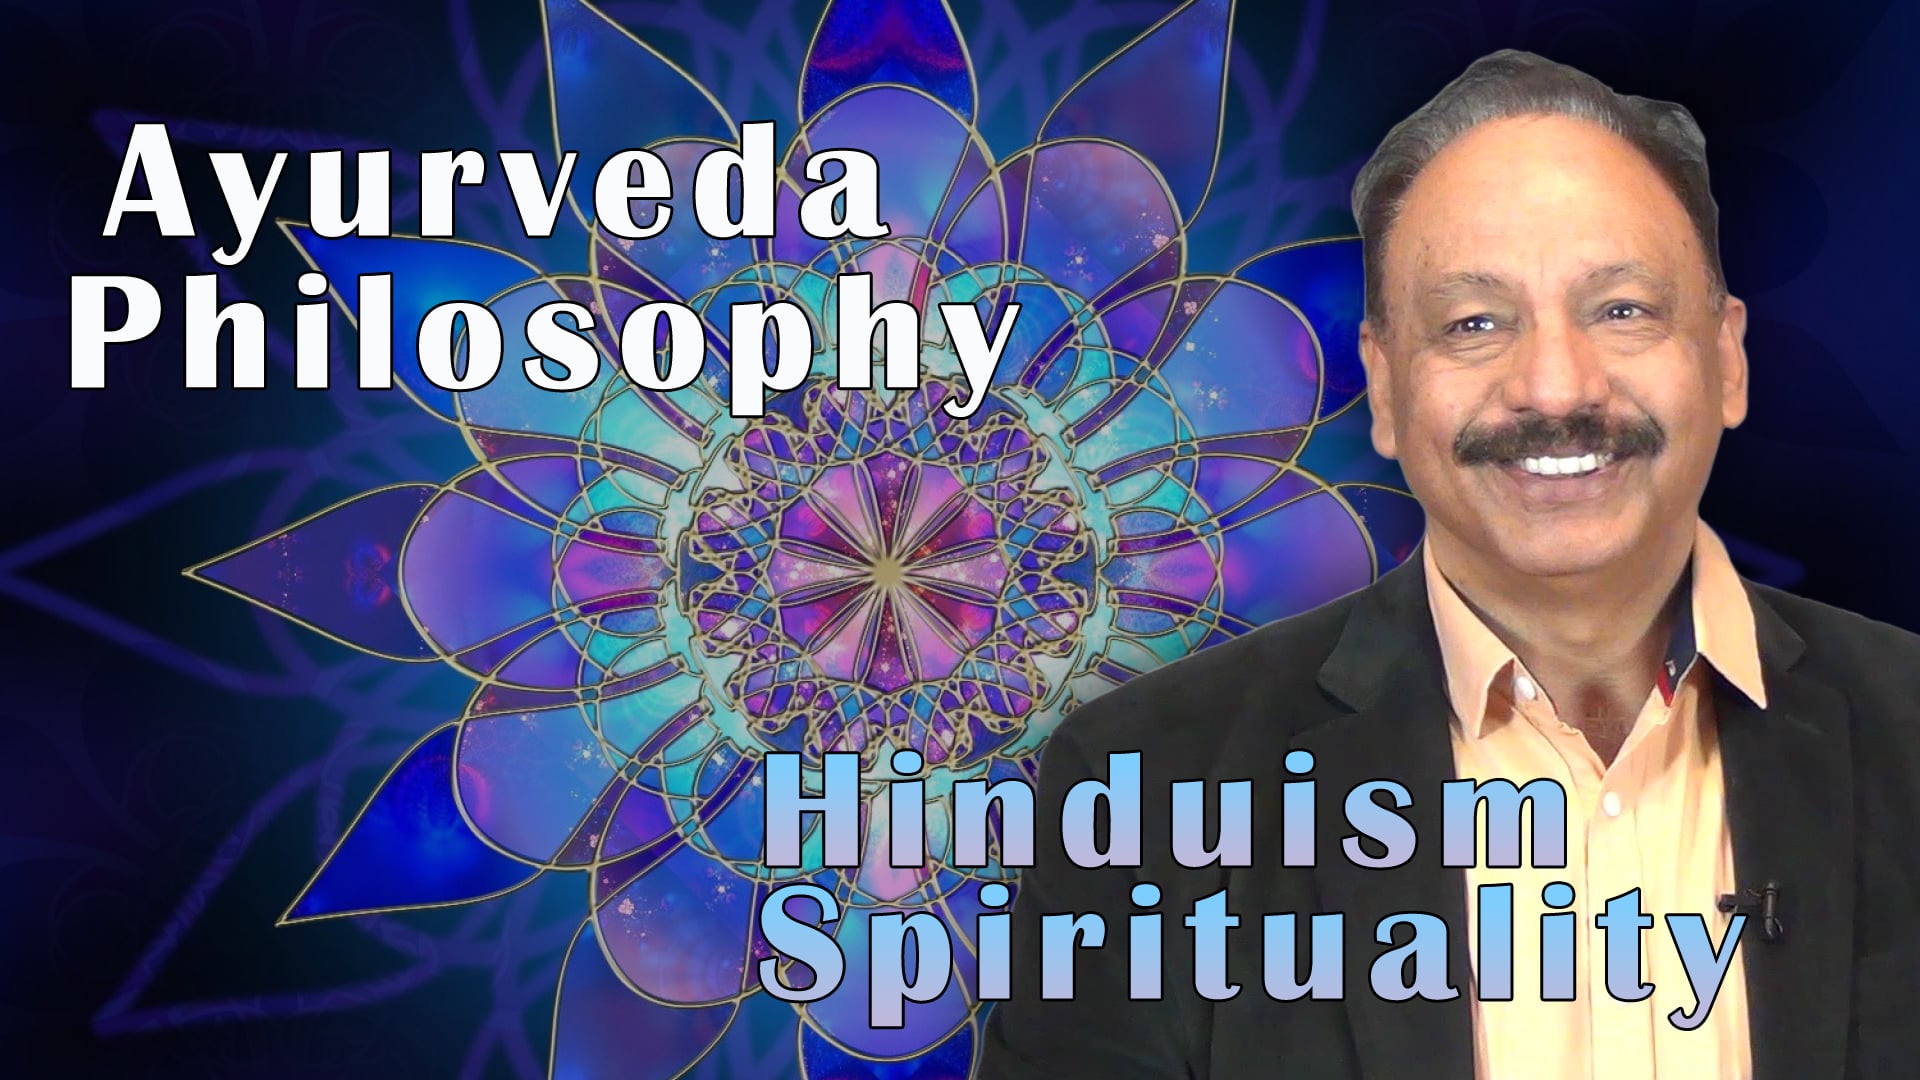 Ayurveda Philosophy and Hinduism Spirituality